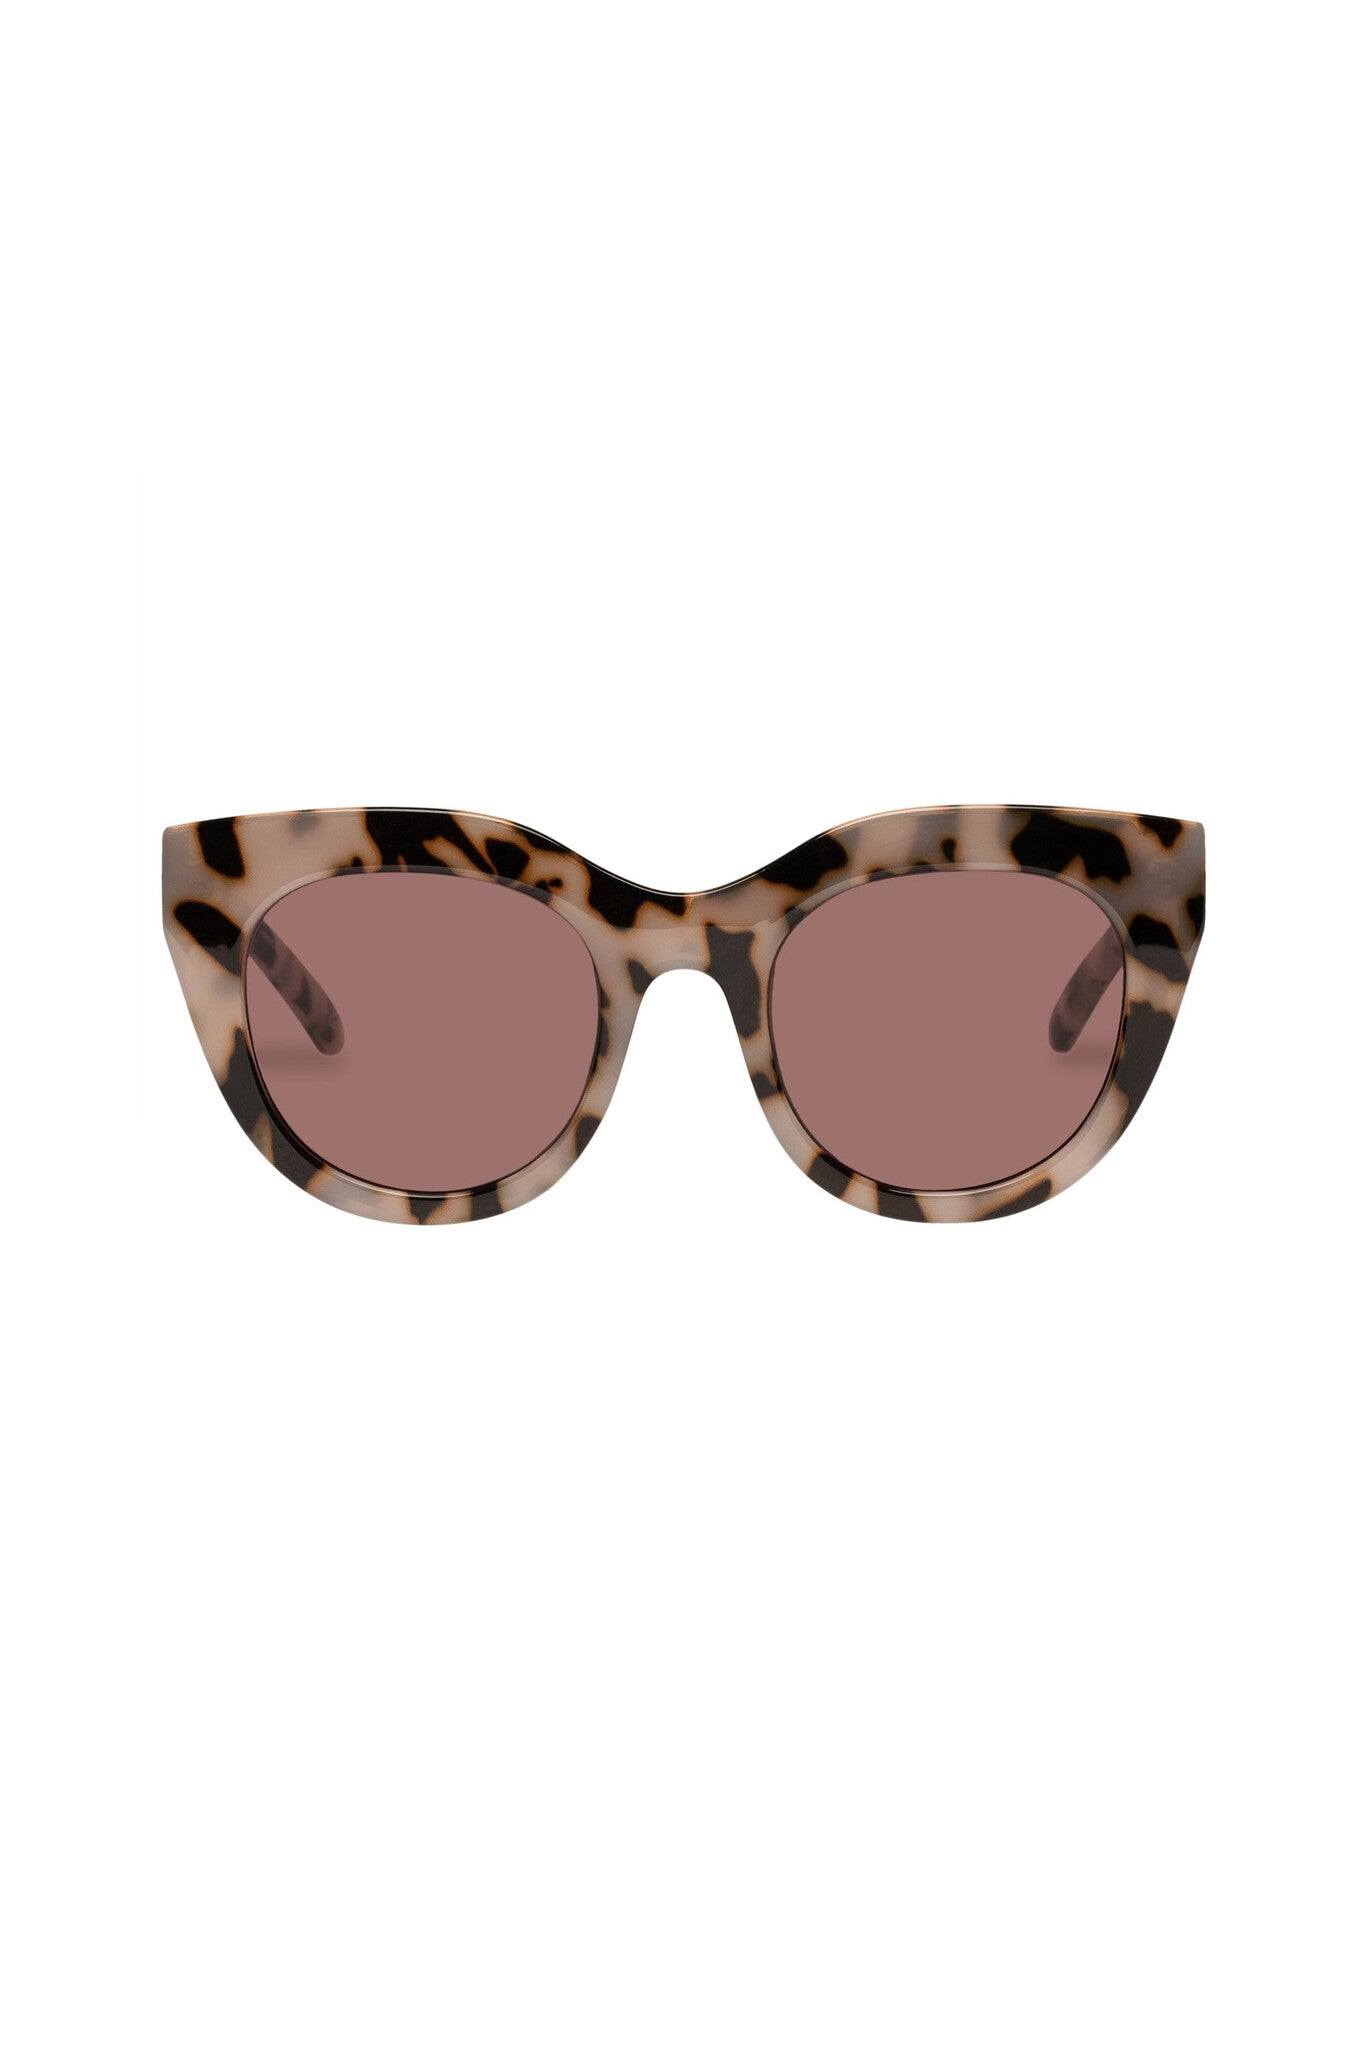 Le Specs Air Heart Sunglasses - Cookie Tort - RUM Amsterdam